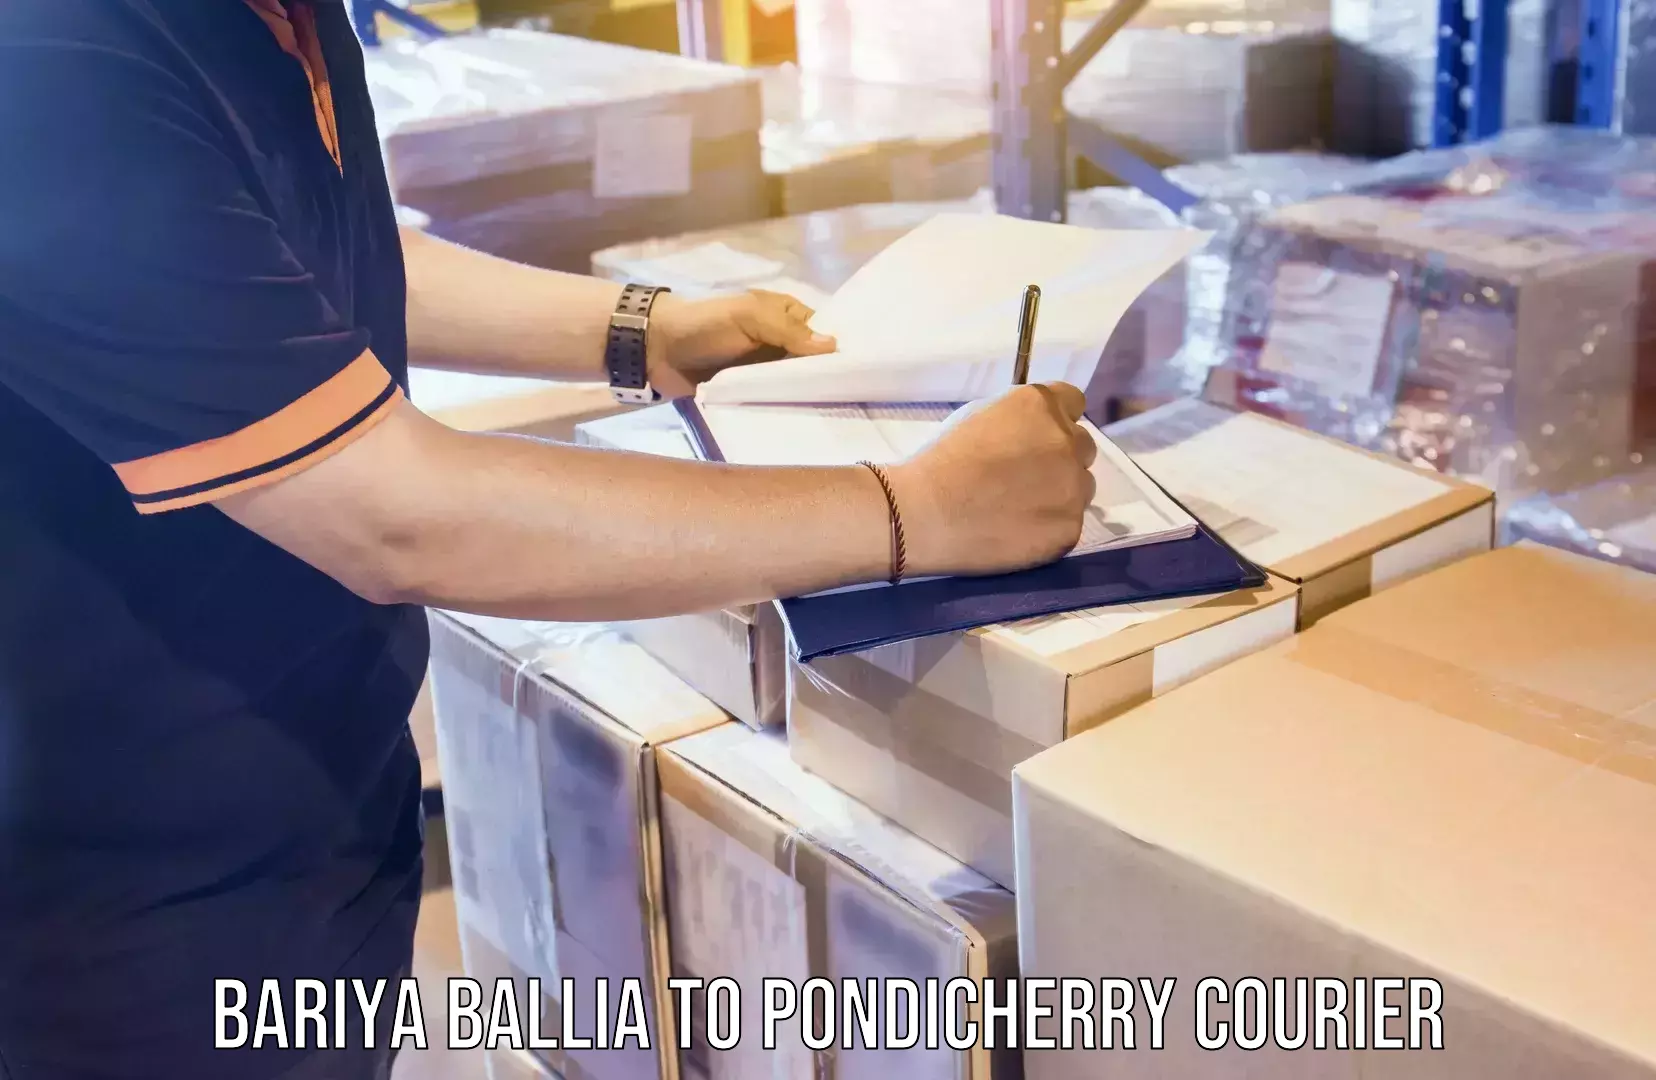 Courier insurance Bariya Ballia to Pondicherry